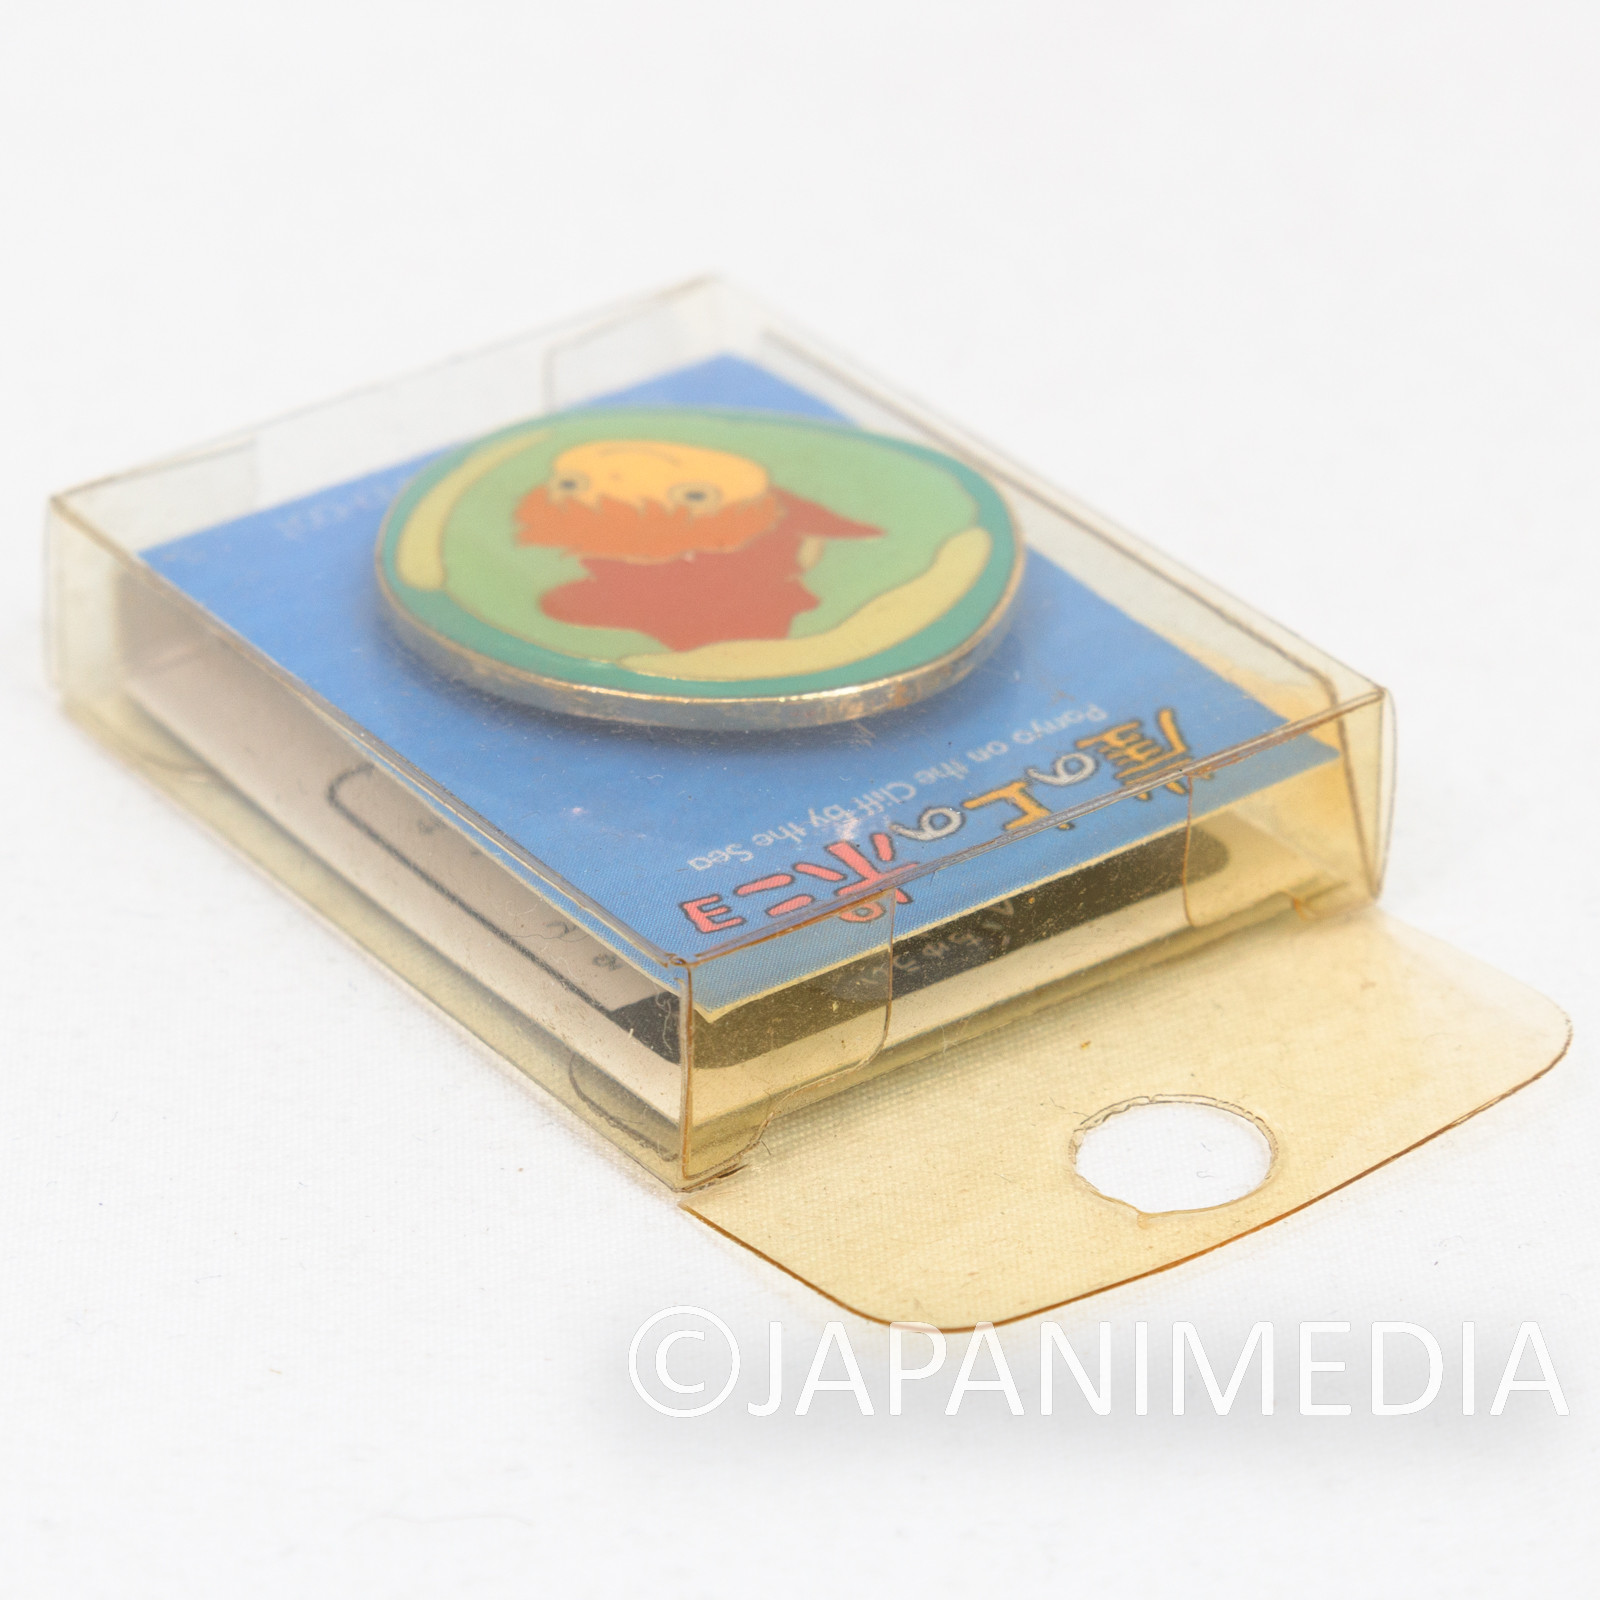 Ponyo on the Cliff by the Sea Metal Pins Ghibli JAPAN ANIME MANGA 4